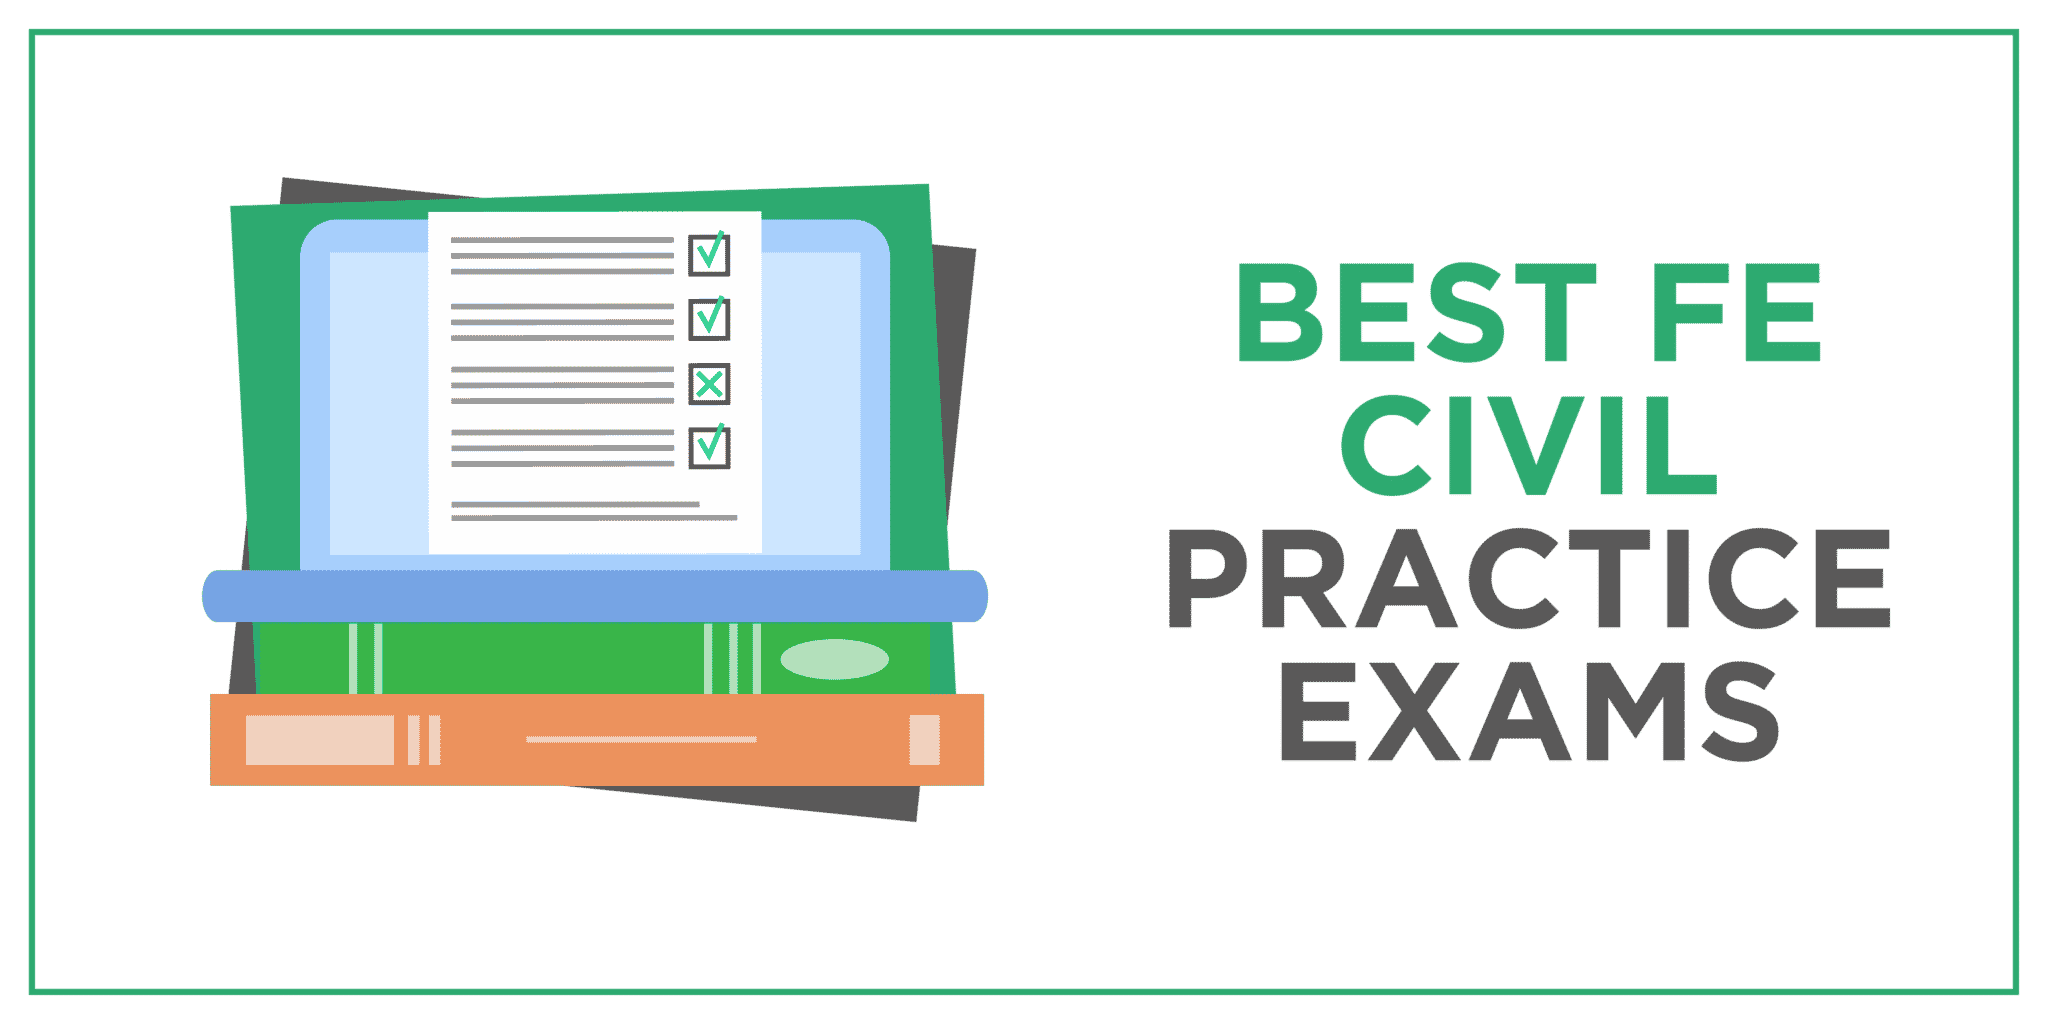 Best FE Civil Practice Exams